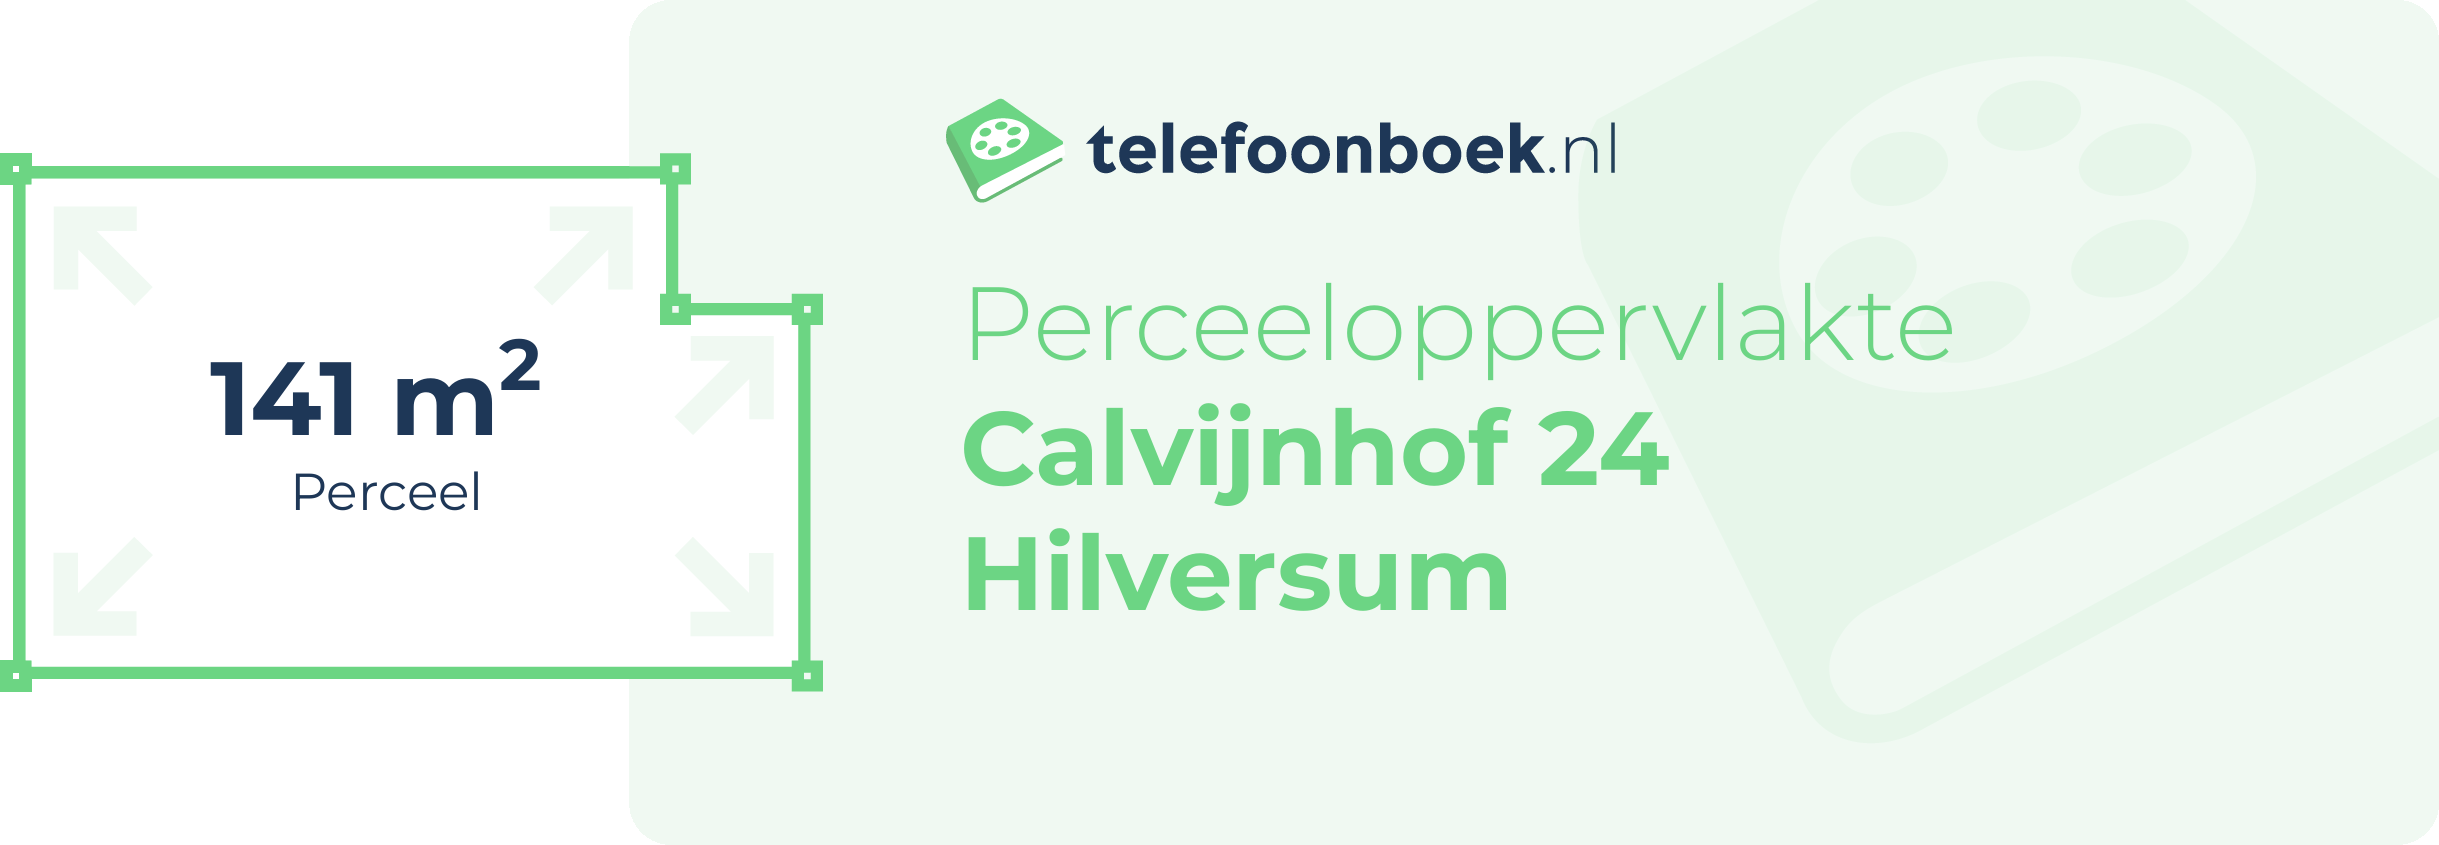 Perceeloppervlakte Calvijnhof 24 Hilversum